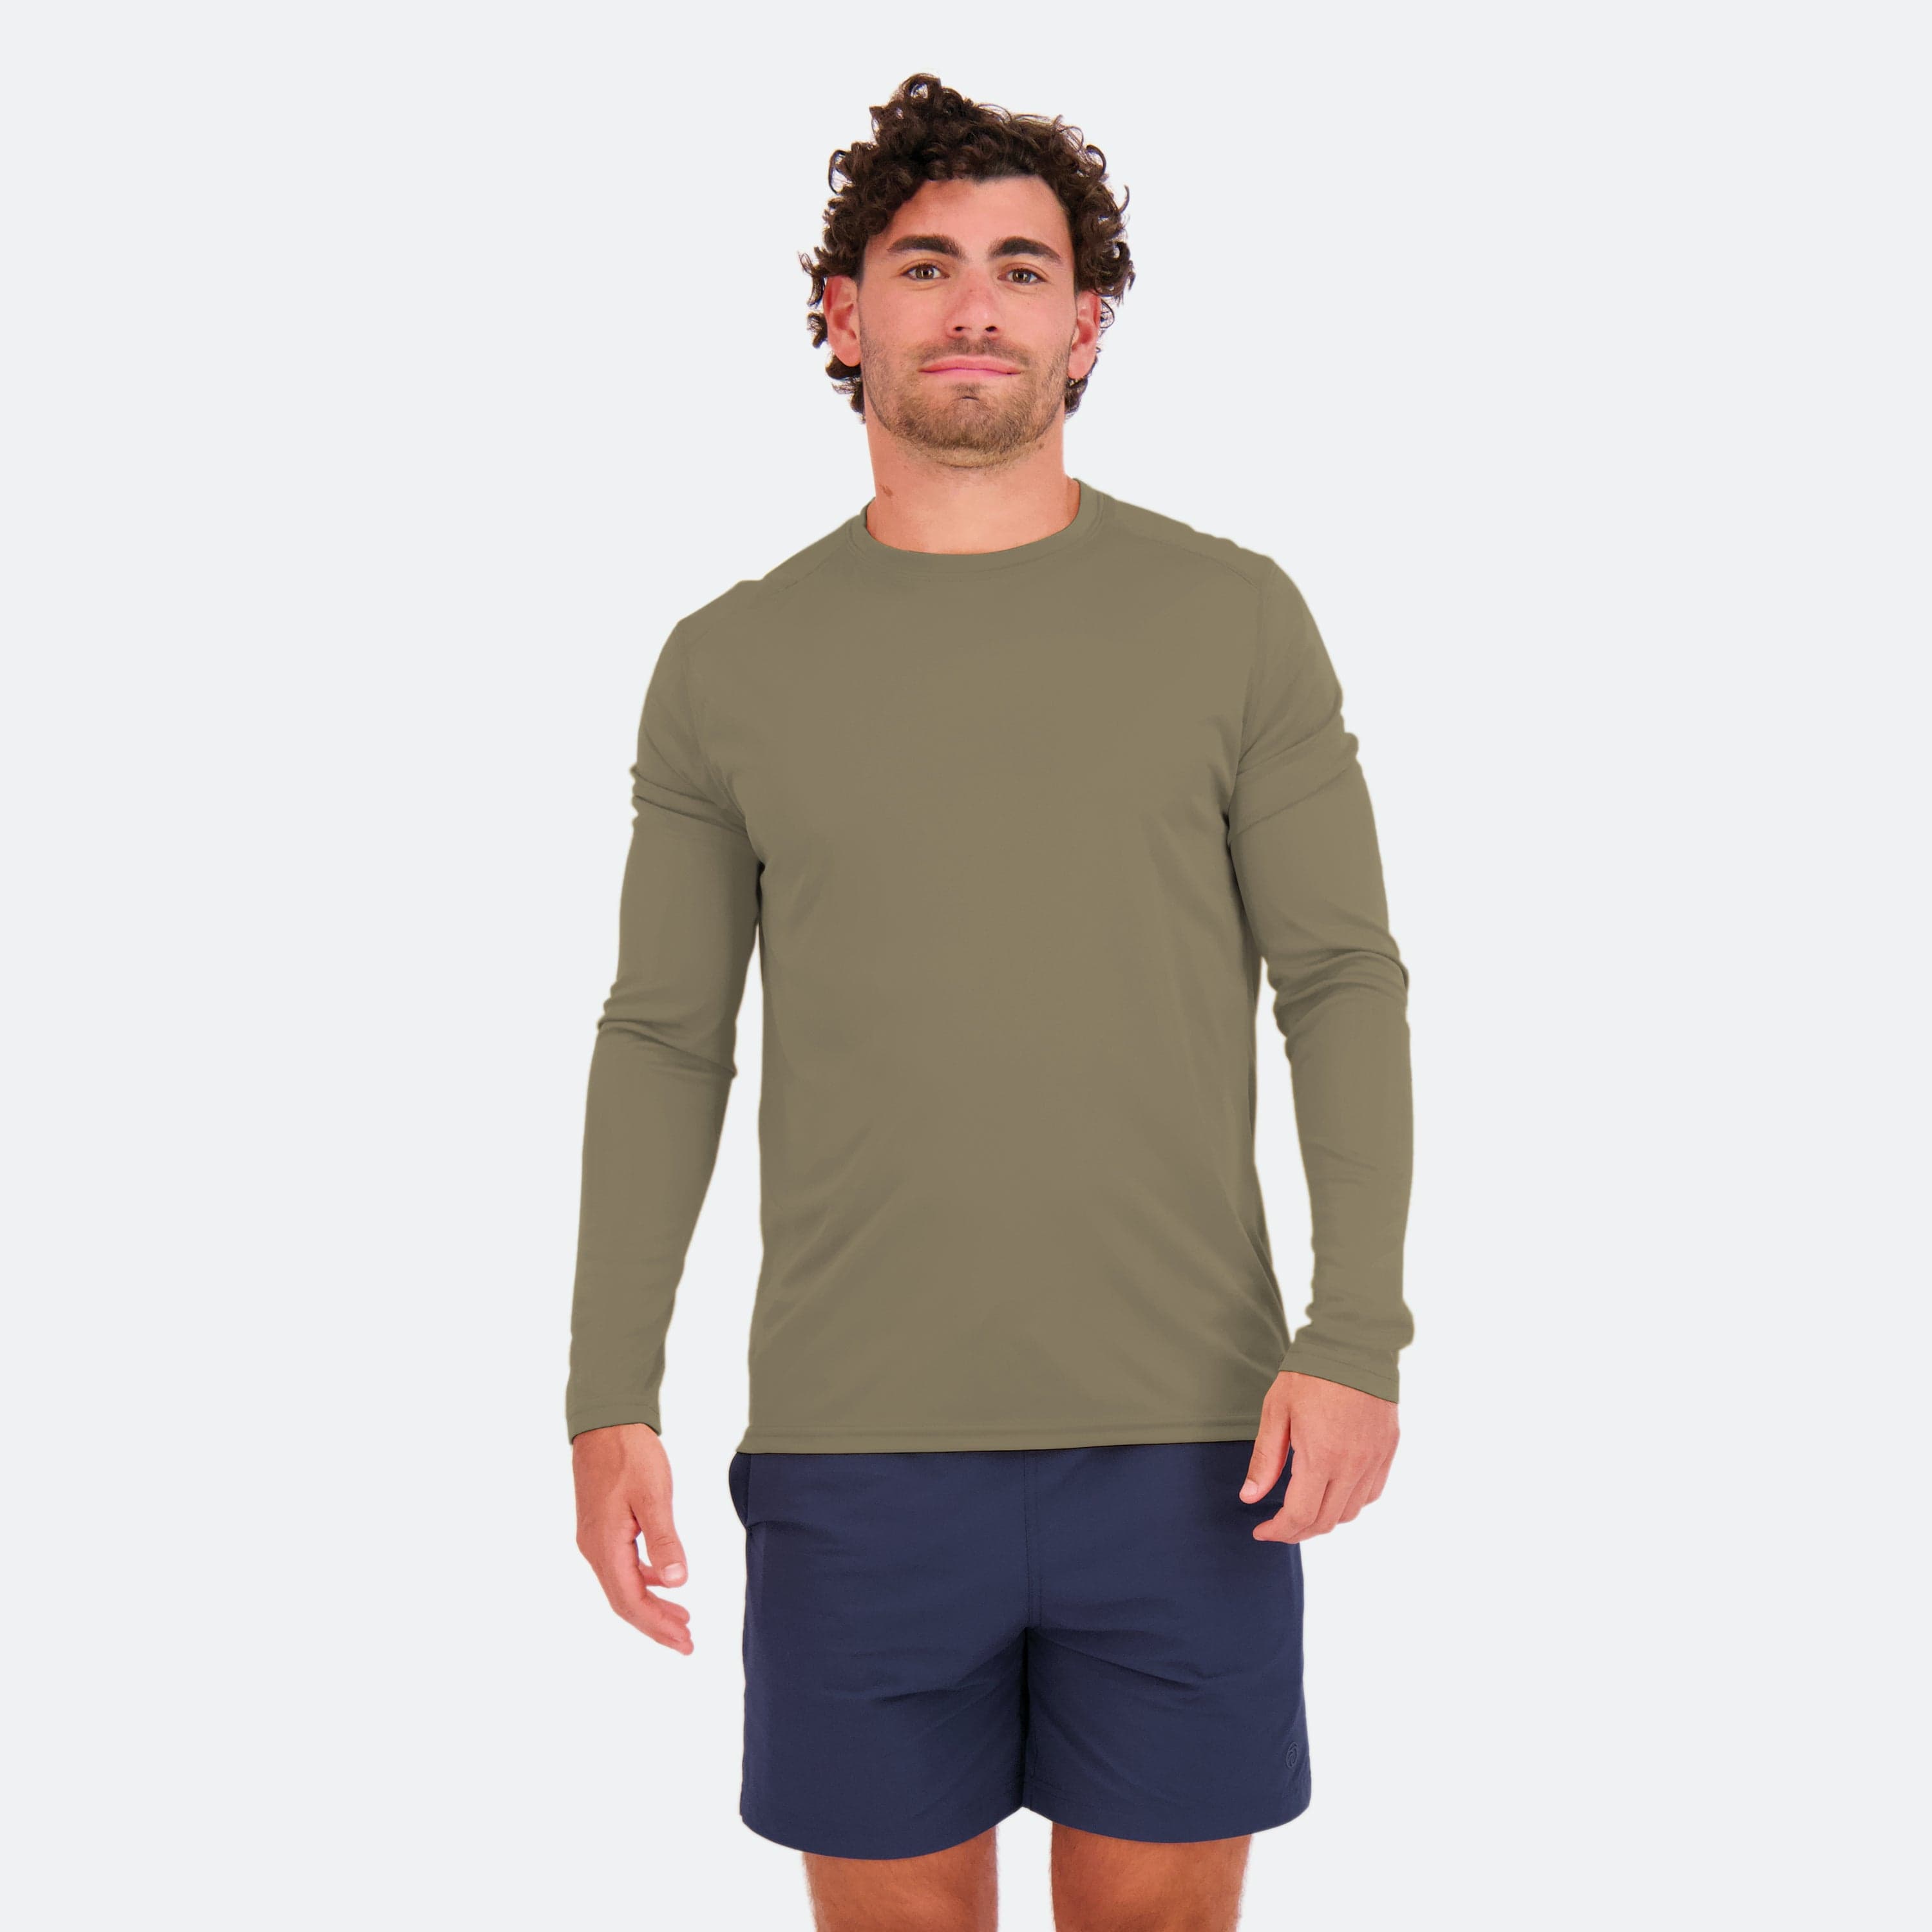 VAPOR ELEMENTAL WEAR | Men's Eco Sol Shirt